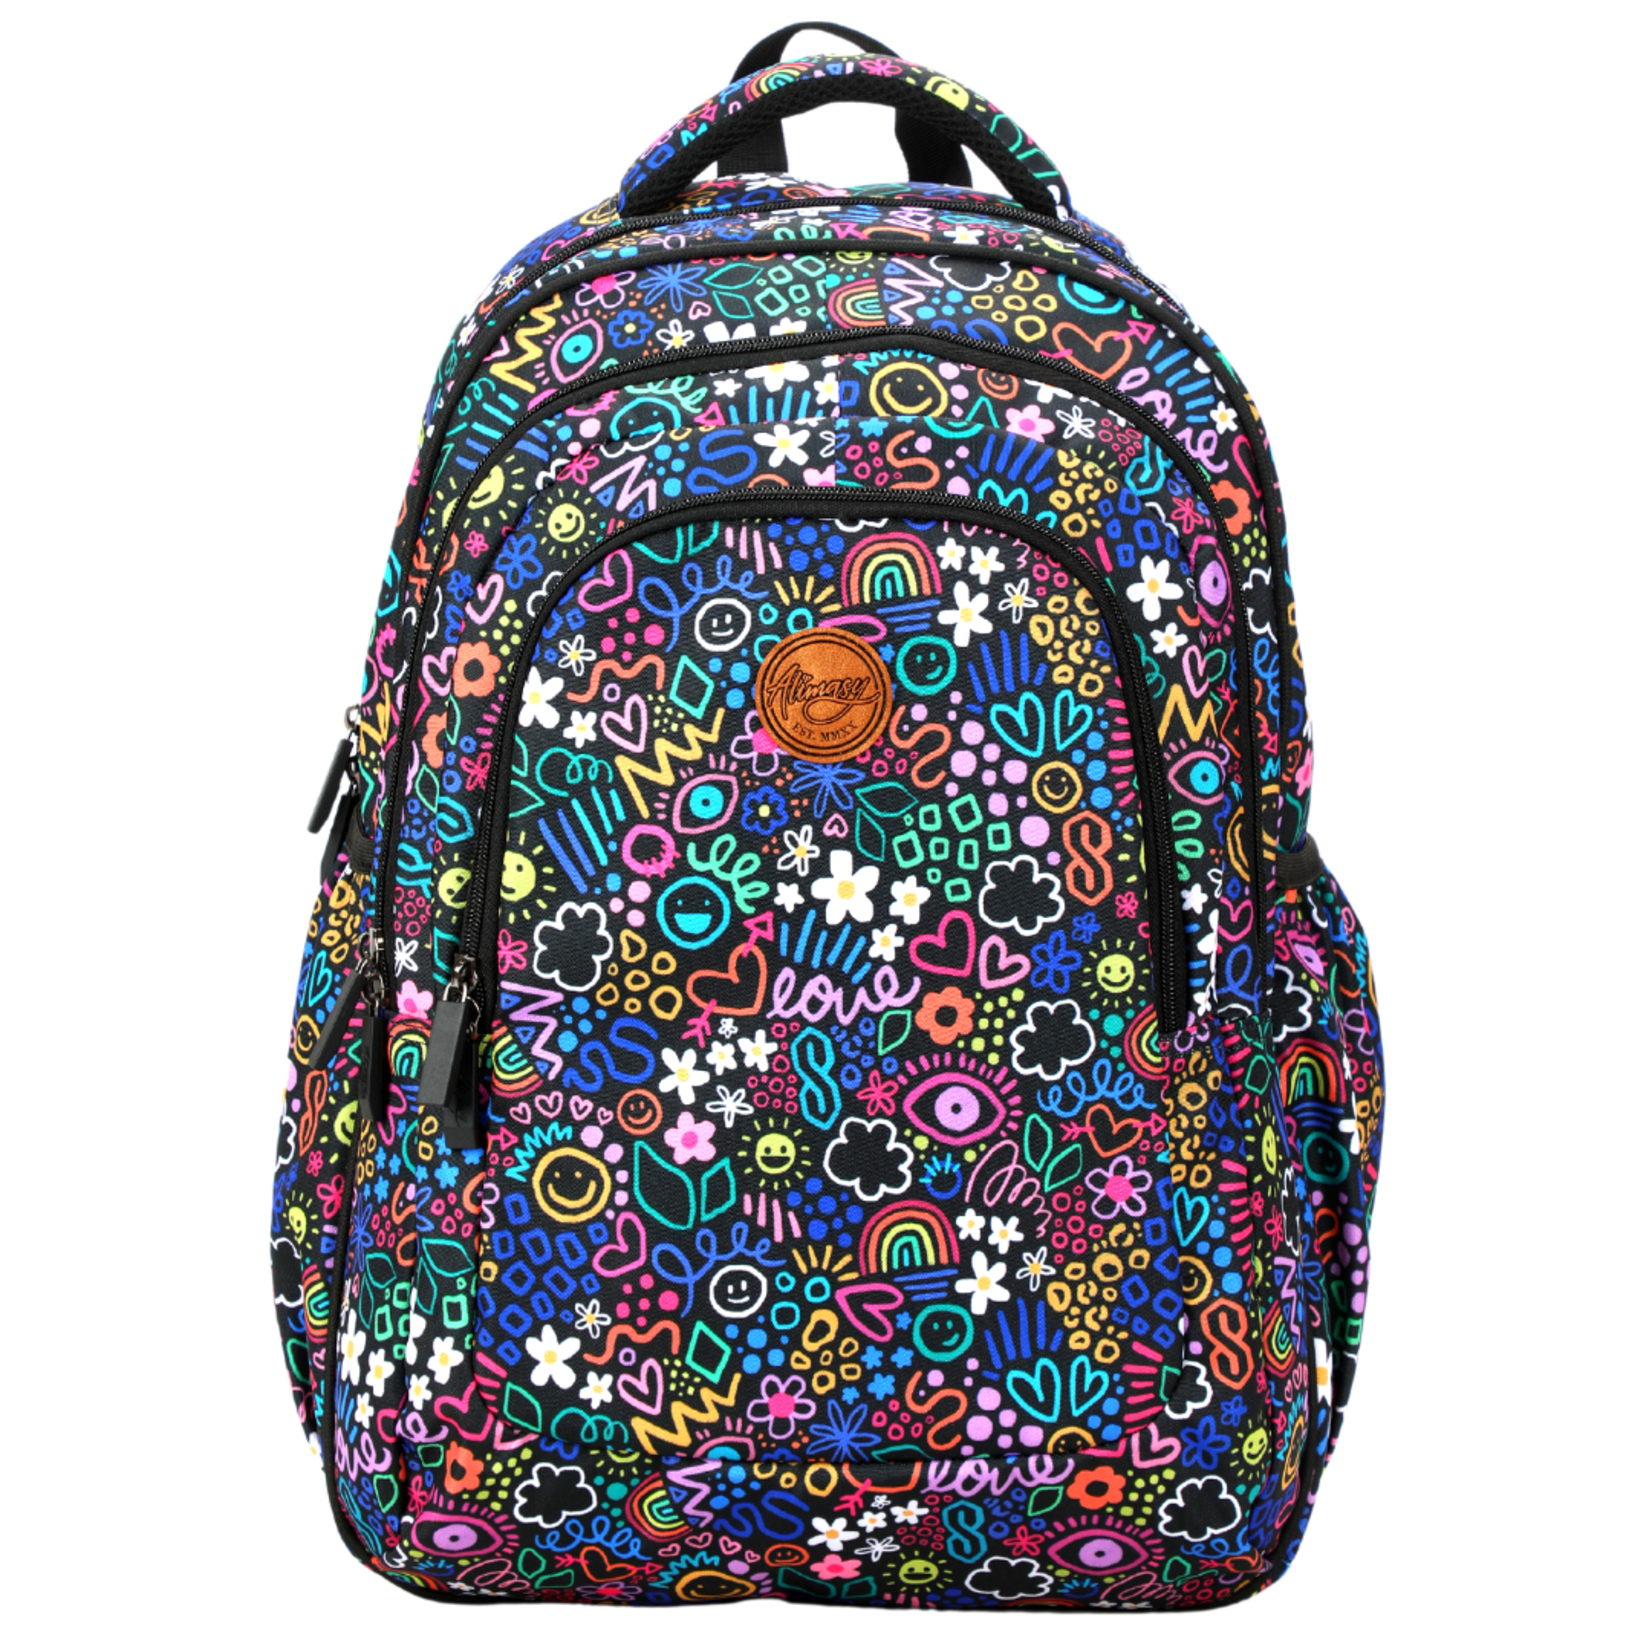 Alimasy Doodle Large School Backpack